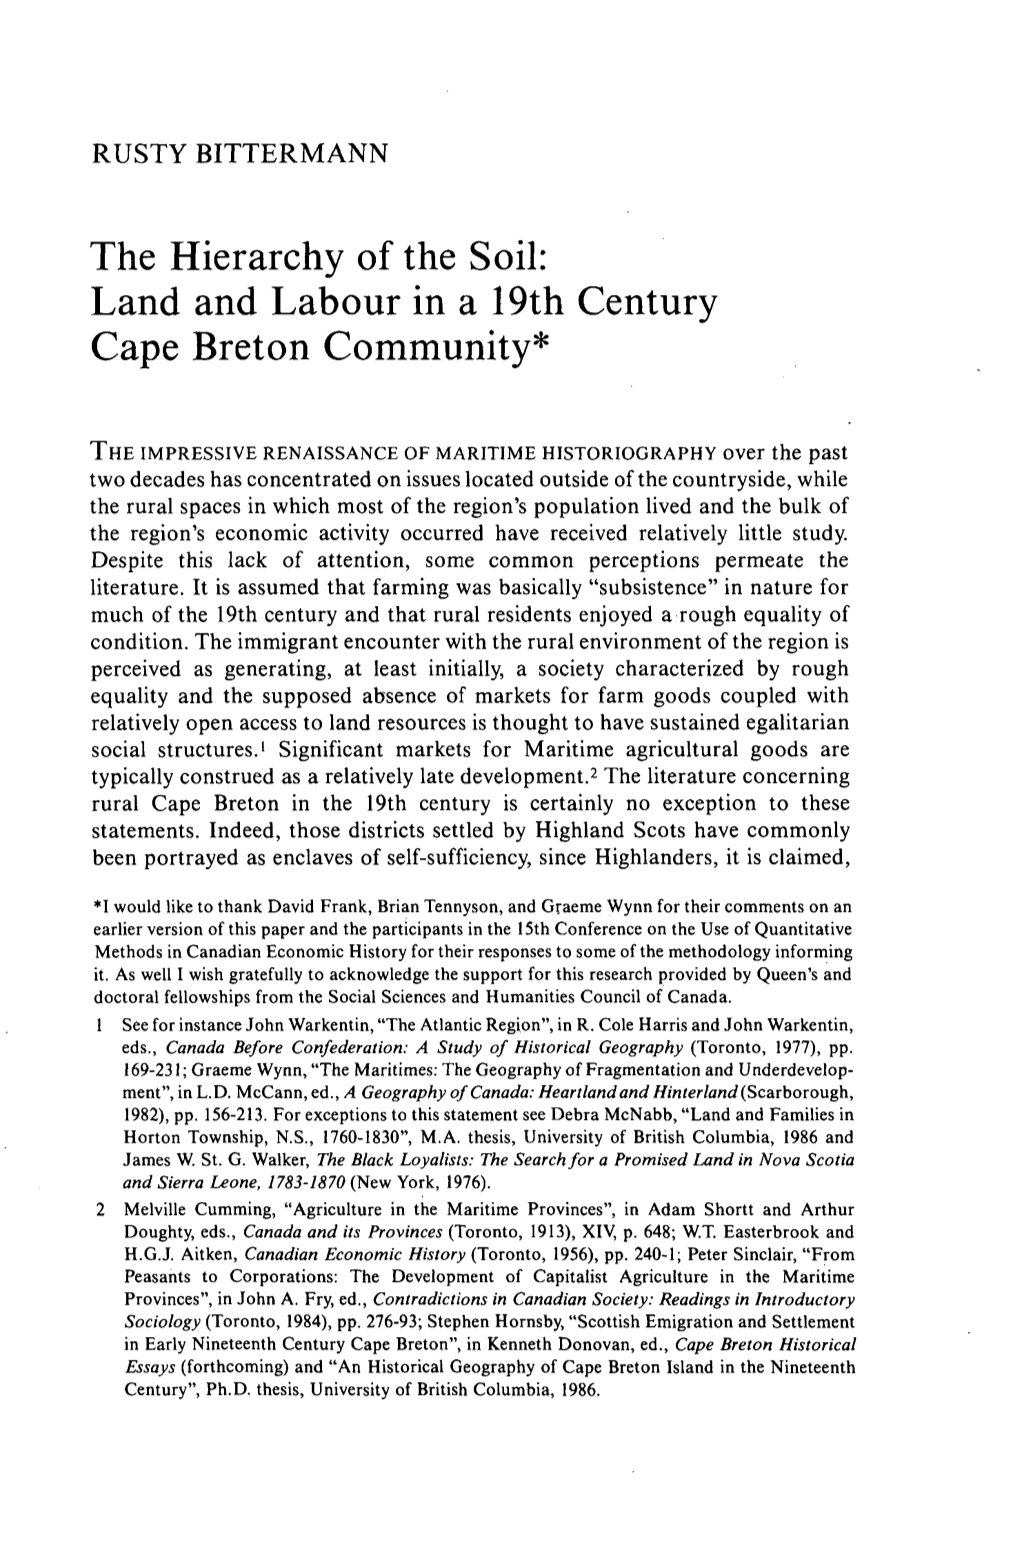 Land and Labour in a 19Th Century Cape Breton Community*